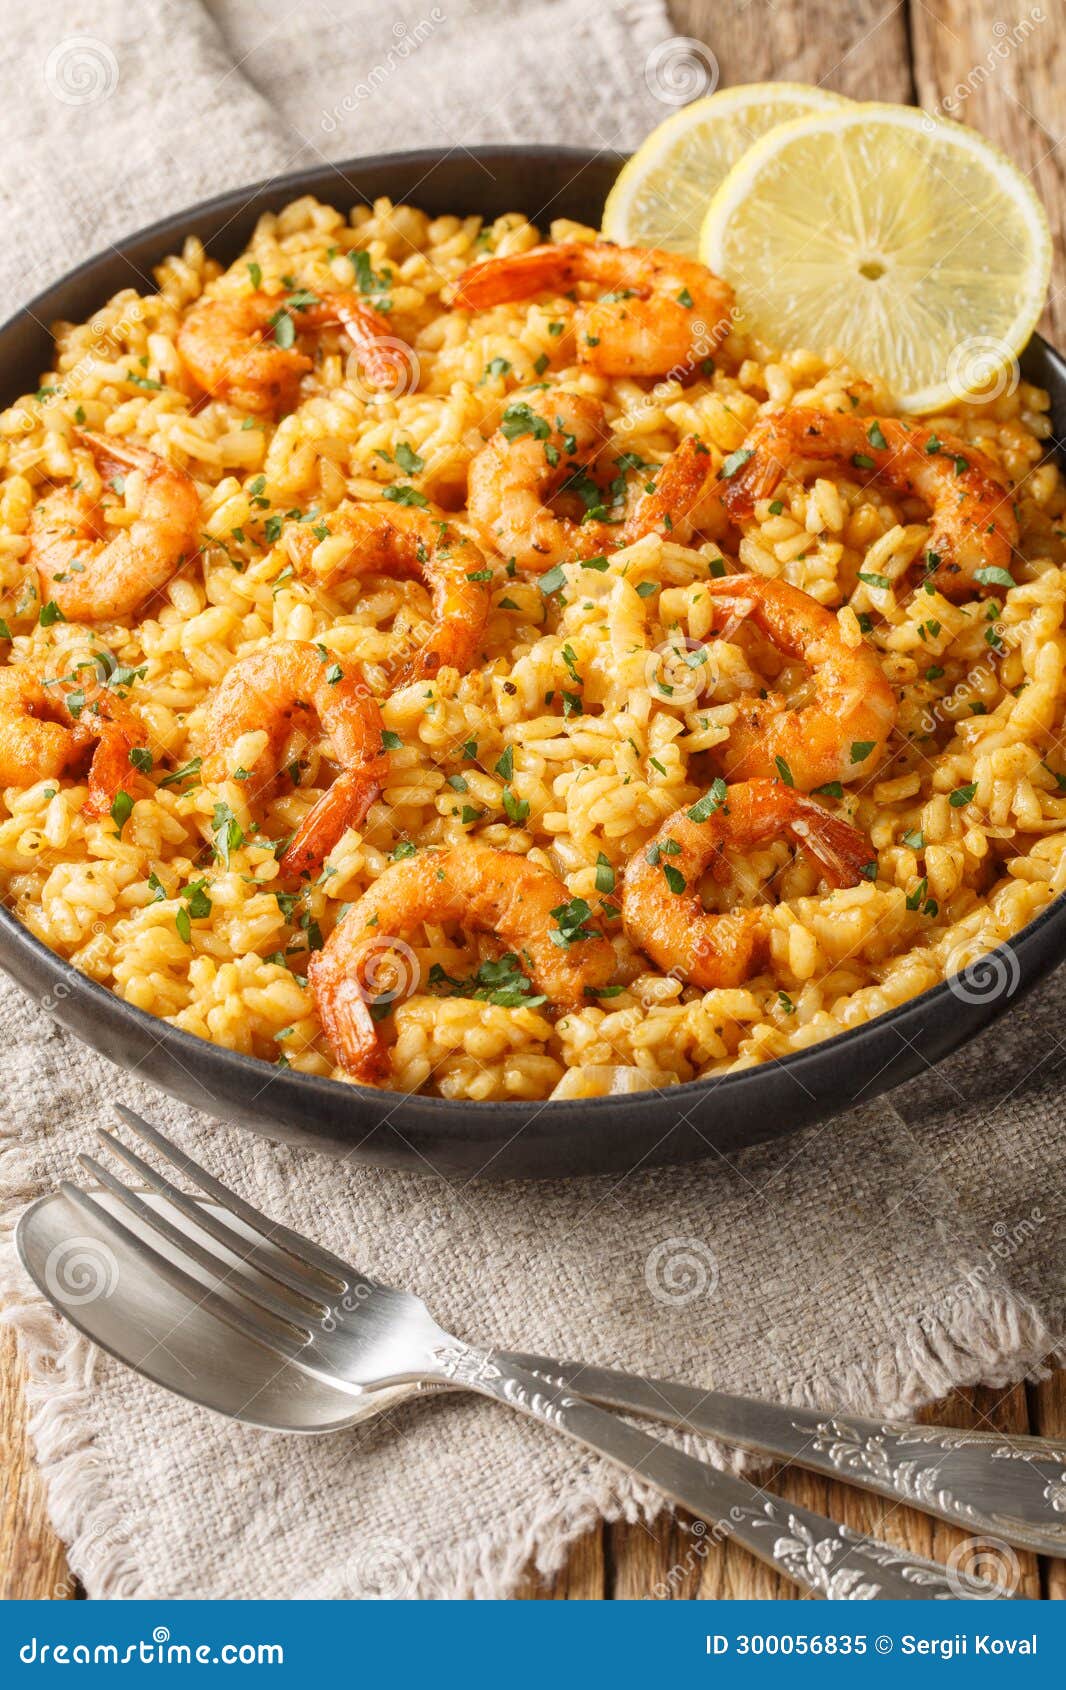 italian risotto ai gamberi or shrimp risotto a closeup on the plate. vertical